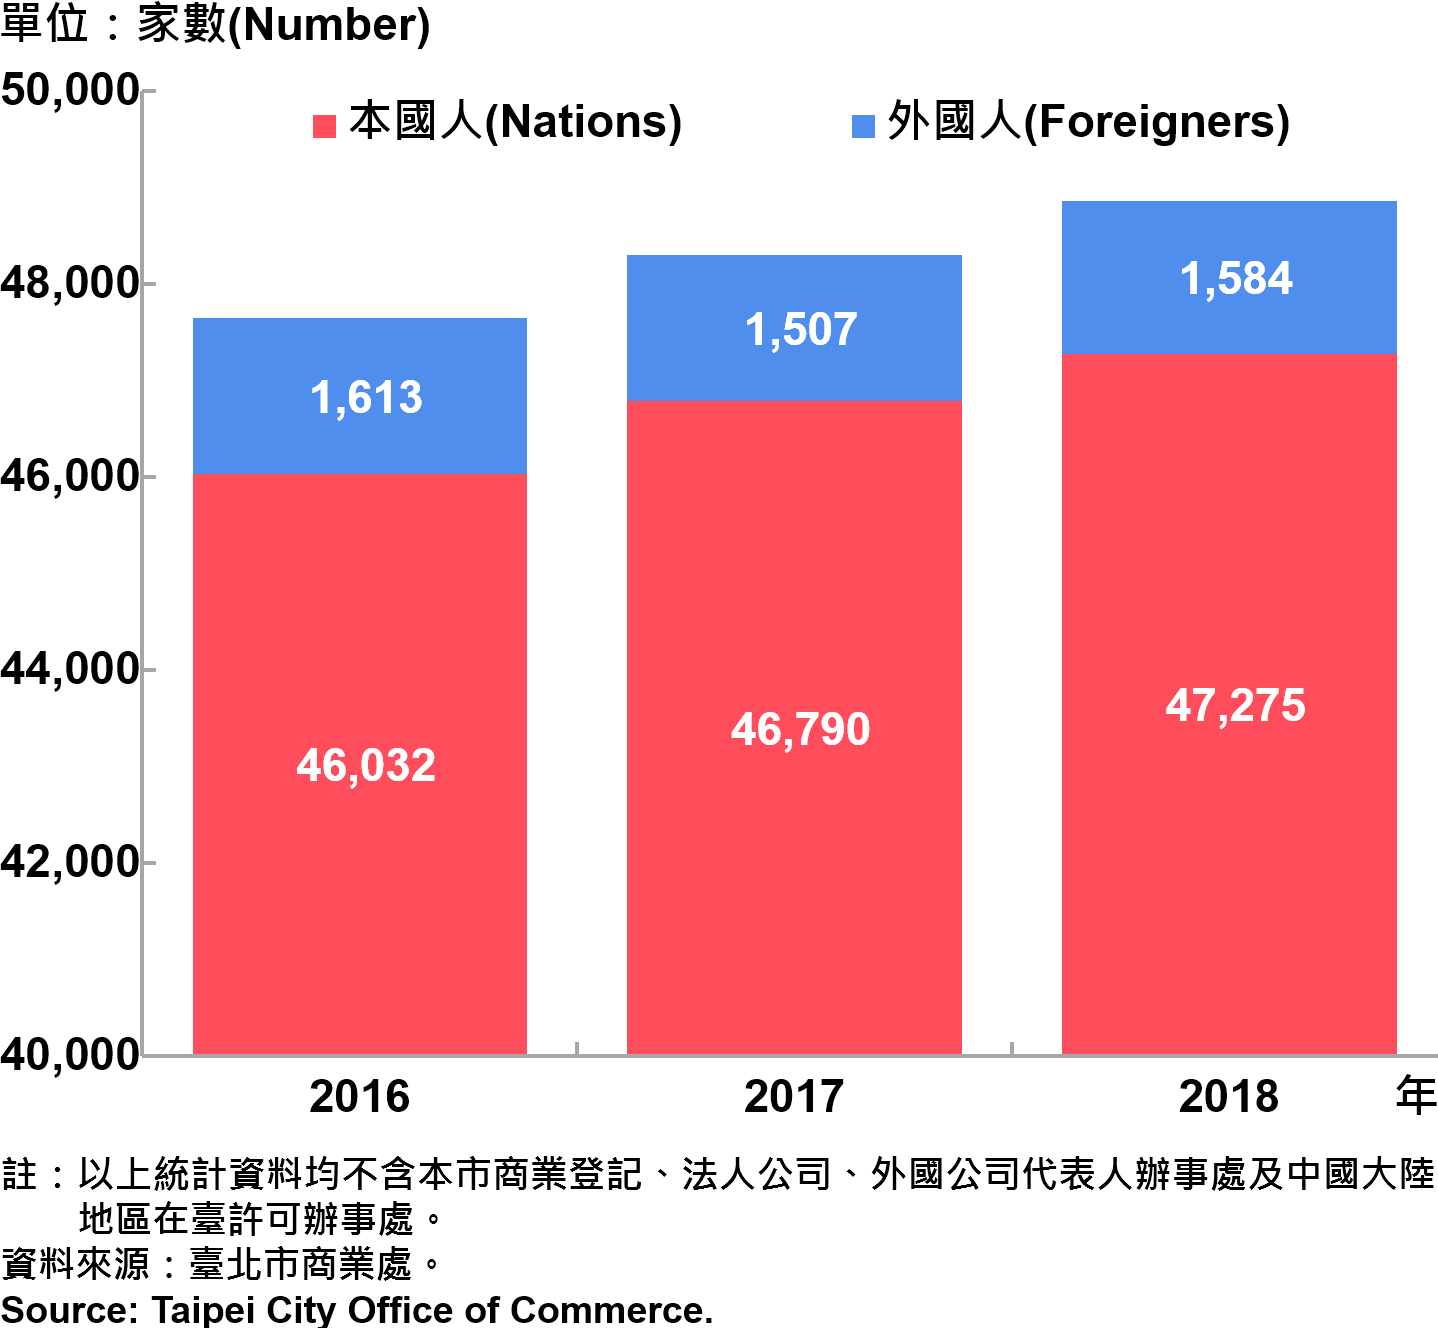 臺北市新創公司青創負責人為本國人與外國人分布情形—依現存家數—2018 Responsible Person of Newly Registered Companies In Taipei City by Nationality - Number of Current —2018